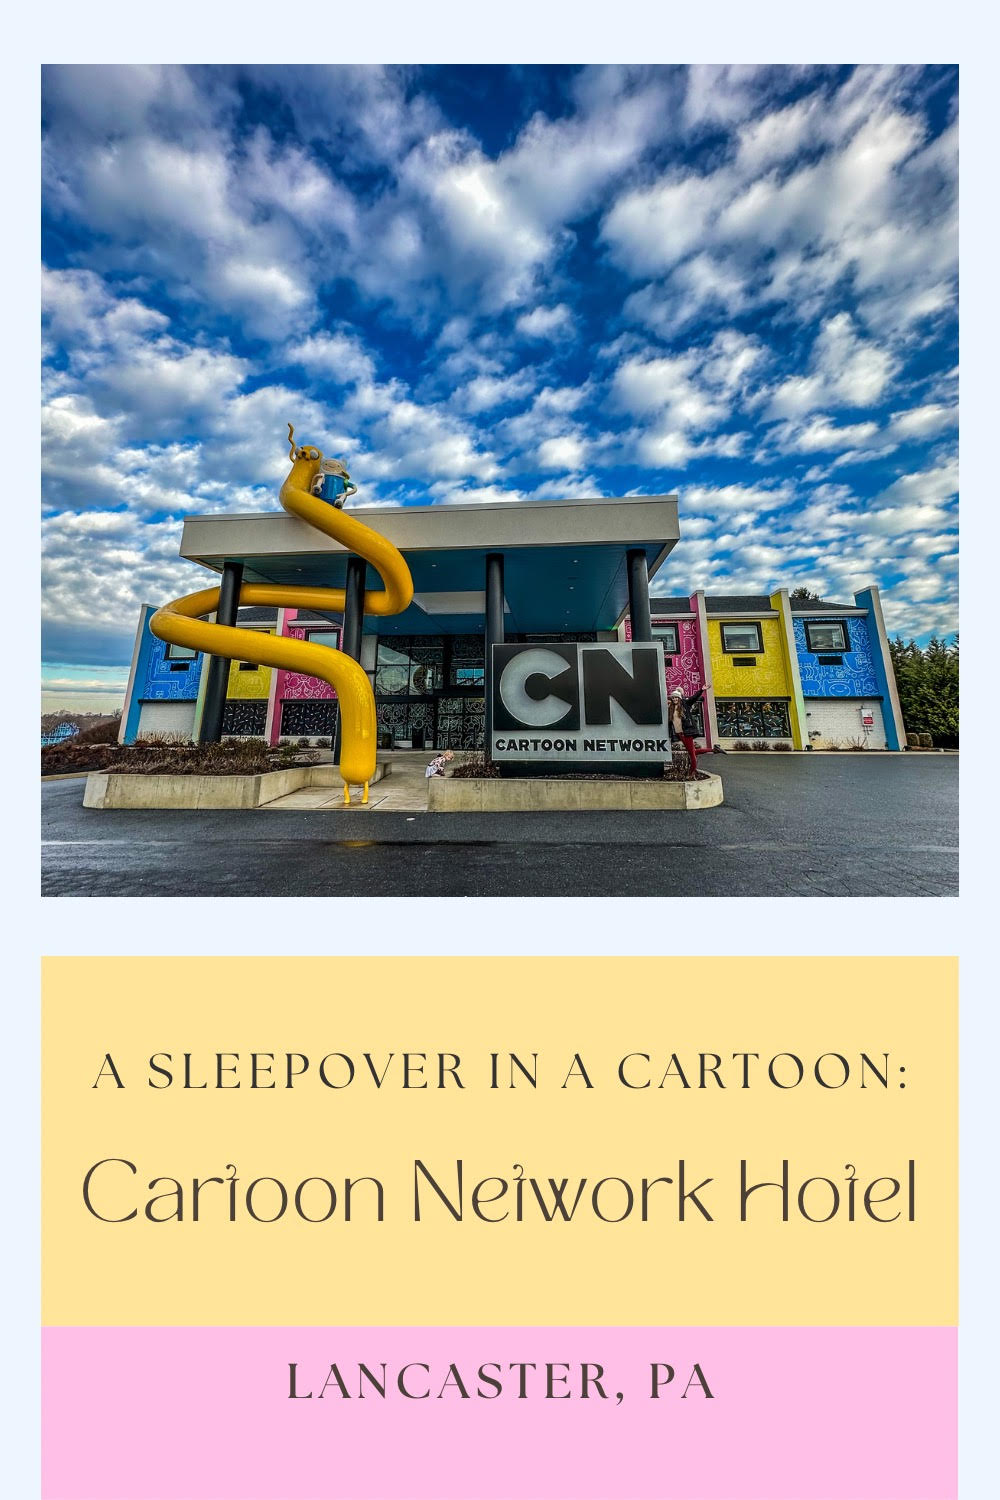 Cartoon Network Hotel opening in Lancaster